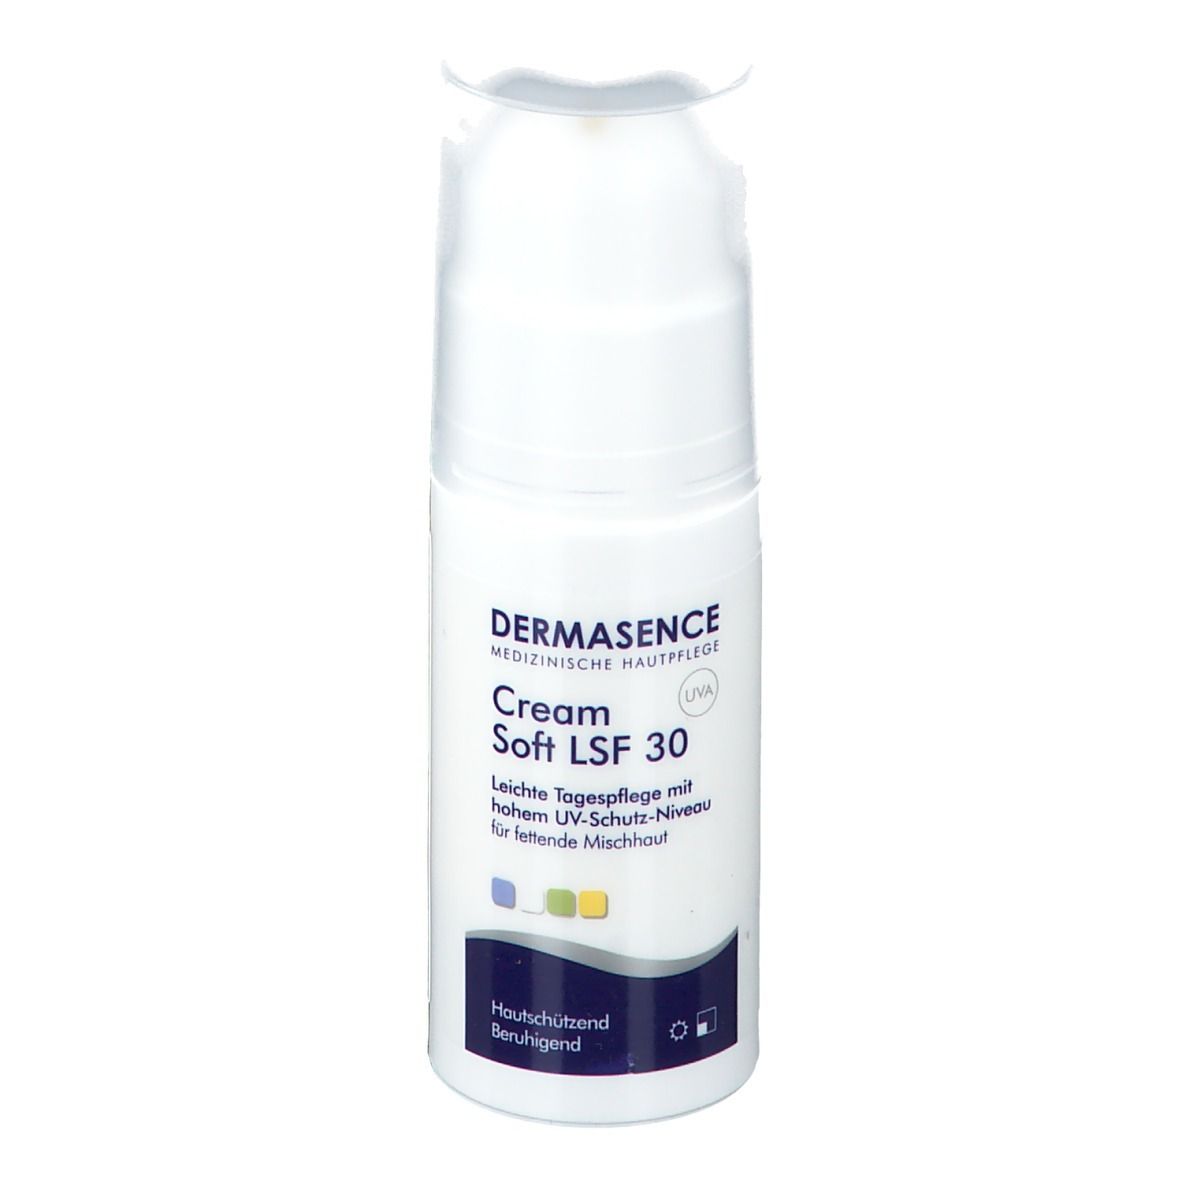 DERMASENCE Cream Soft LSF 30